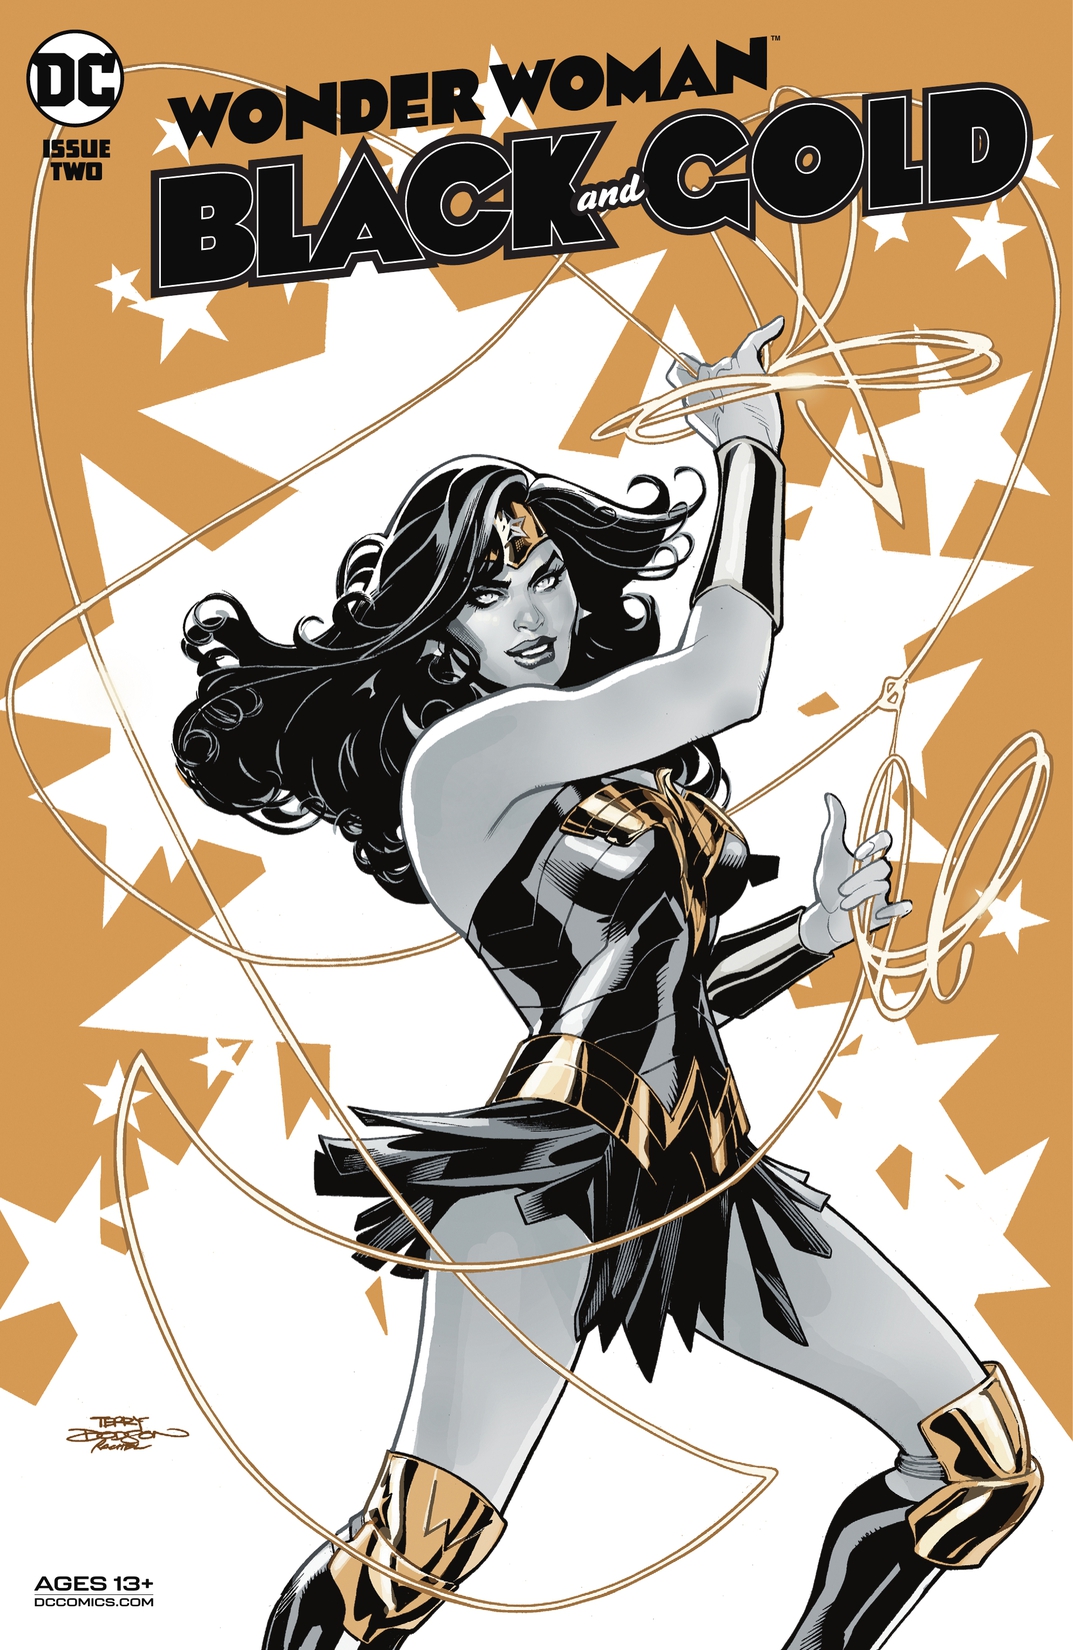 Wonder Woman Black & Gold #2 preview images